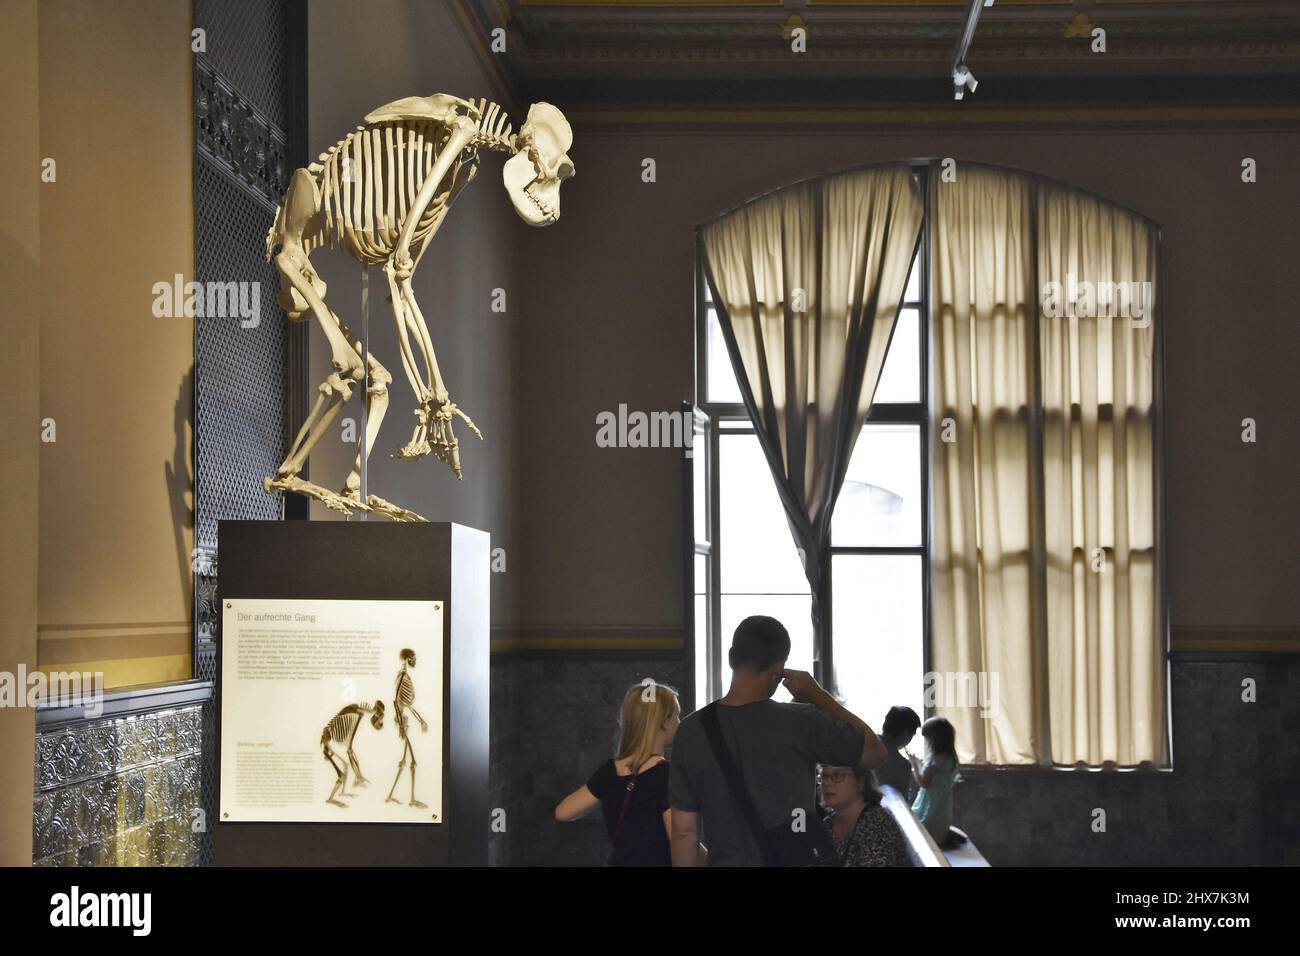 Gorilla skeleton depicting walking upright hominid evolution, displayed at Museum of Natural History (Museum für Naturkunde) in Berlin Germany. Stock Photo